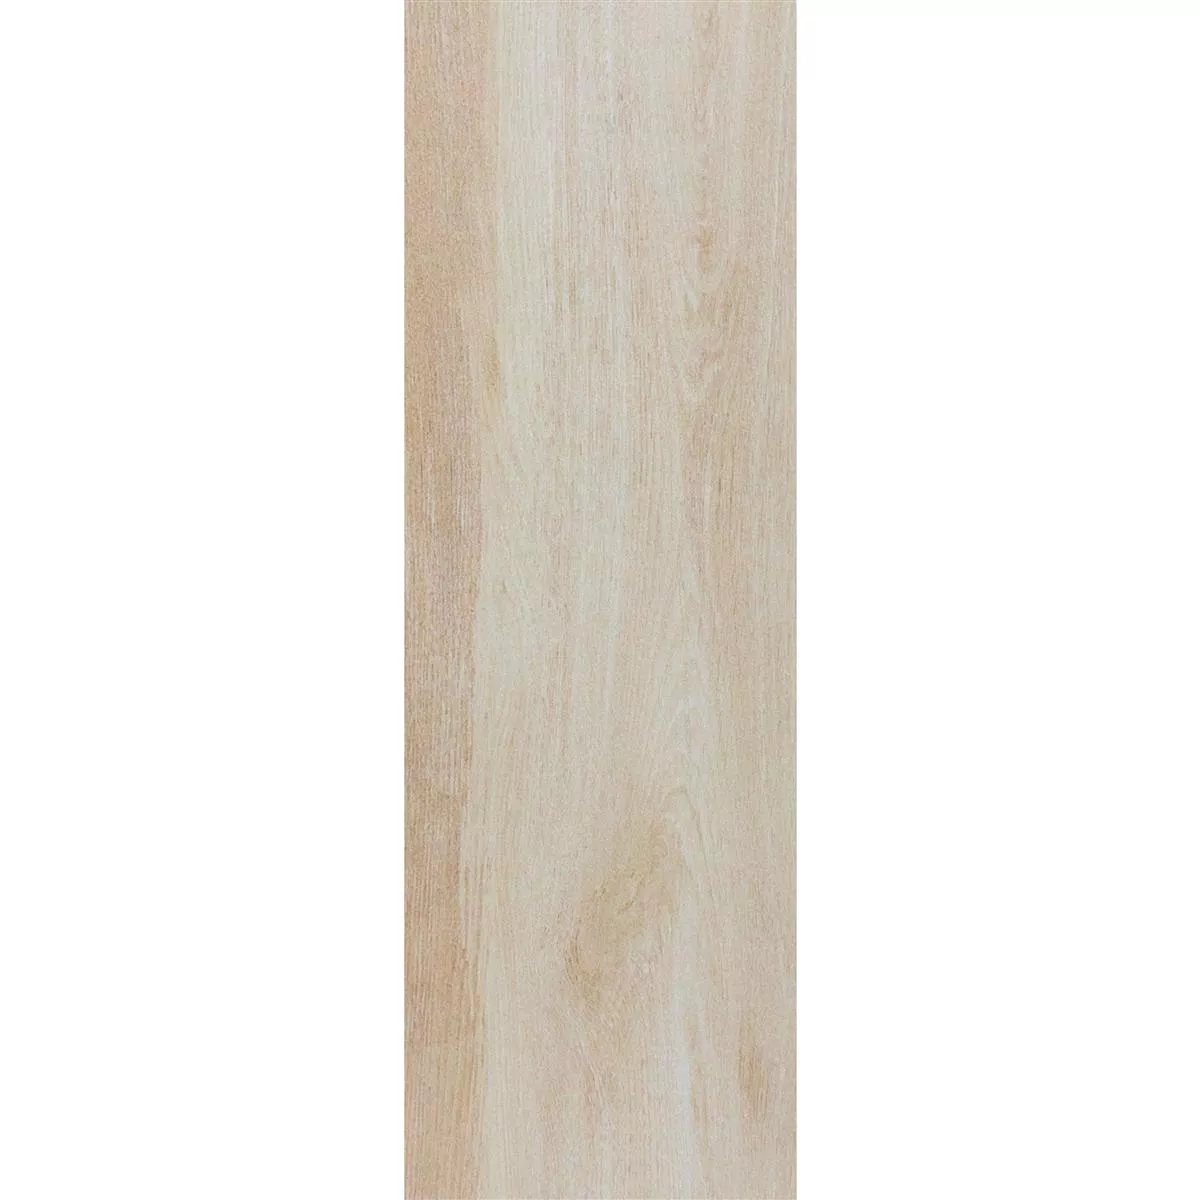 Sample Floor Tiles Wood Optic Caledonia Beige 30x120cm